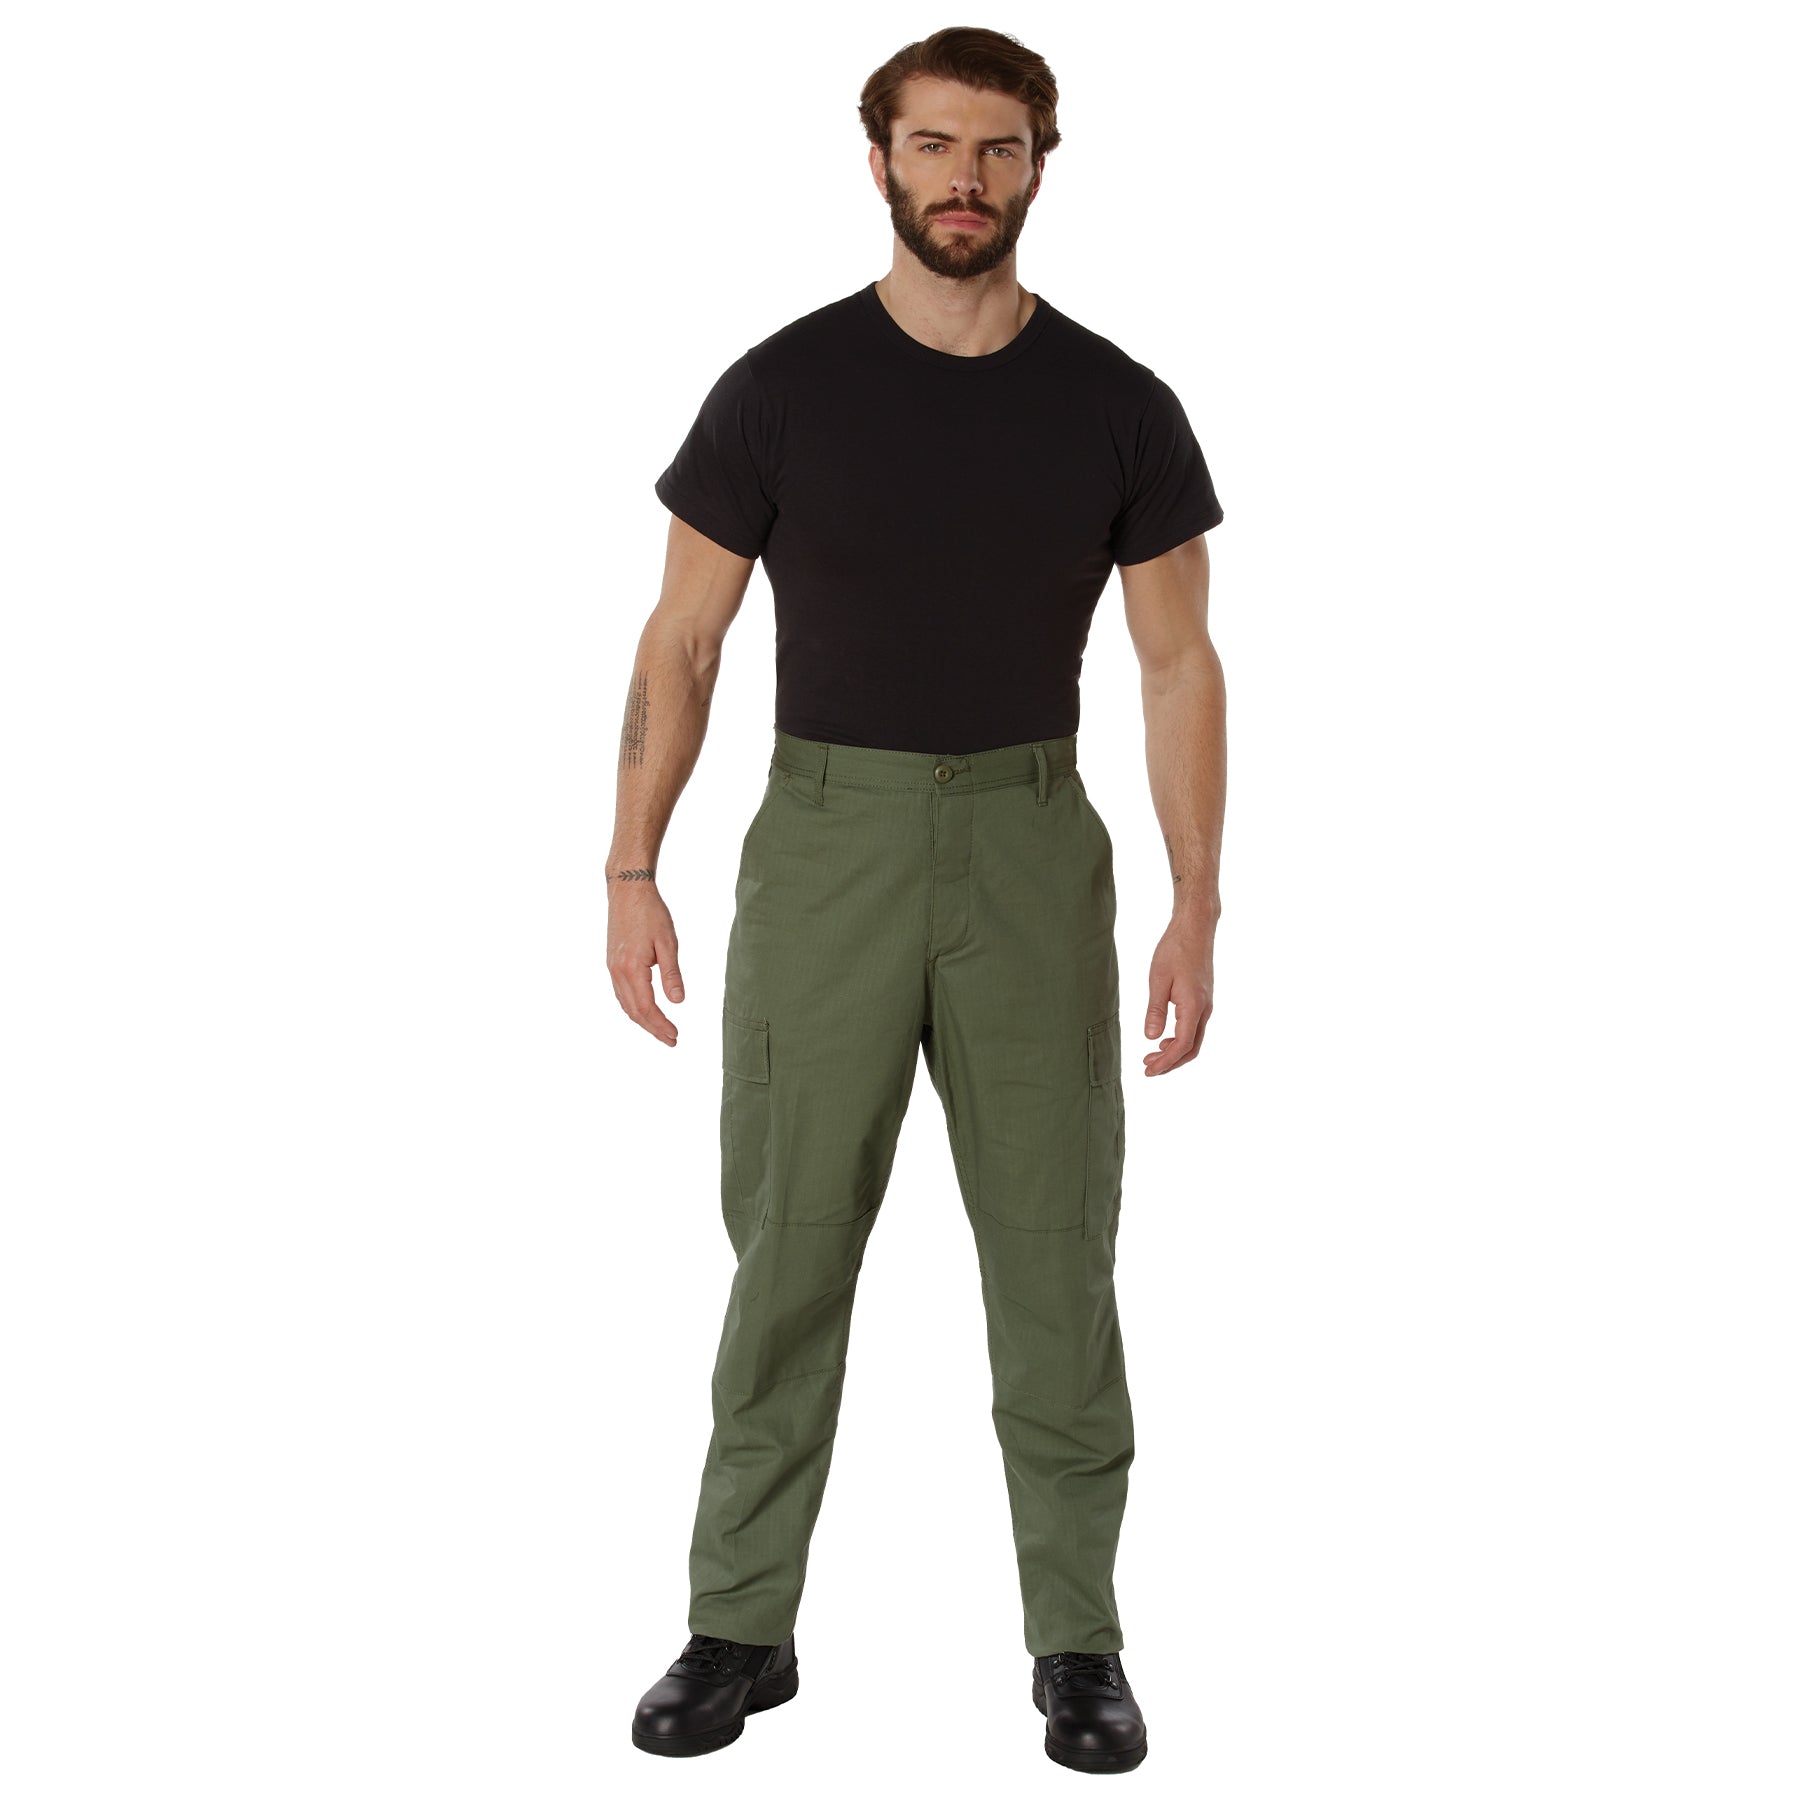 Cotton Rip-Stop Tactical BDU Pants Olive Drab